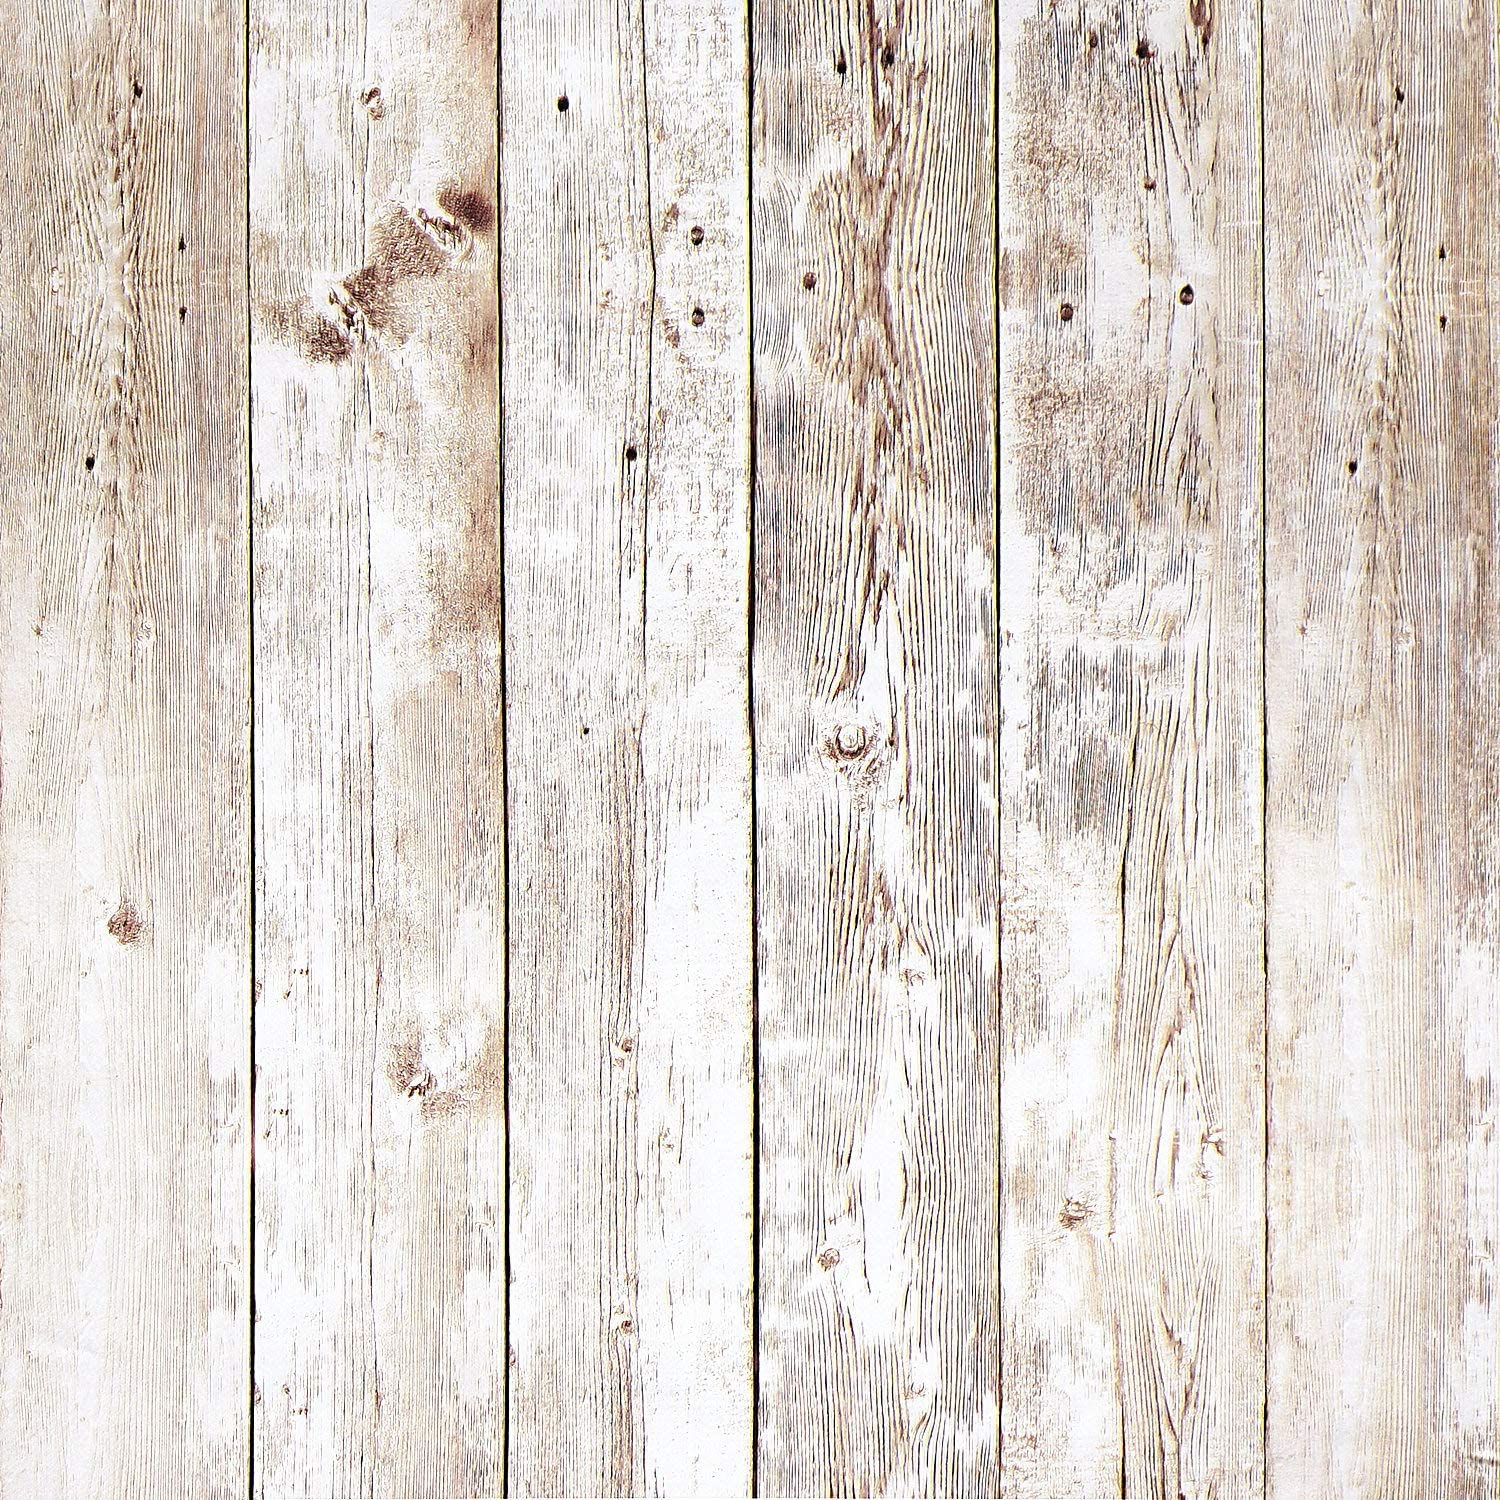 17.7x197 Rustic Wood Wallpaper Wood Contact Paper Shiplap Wood Plank Wallpaper Stick and Peel Self Adhesive Removable Wallpaper Faux Wood Grain Vinyl Roll